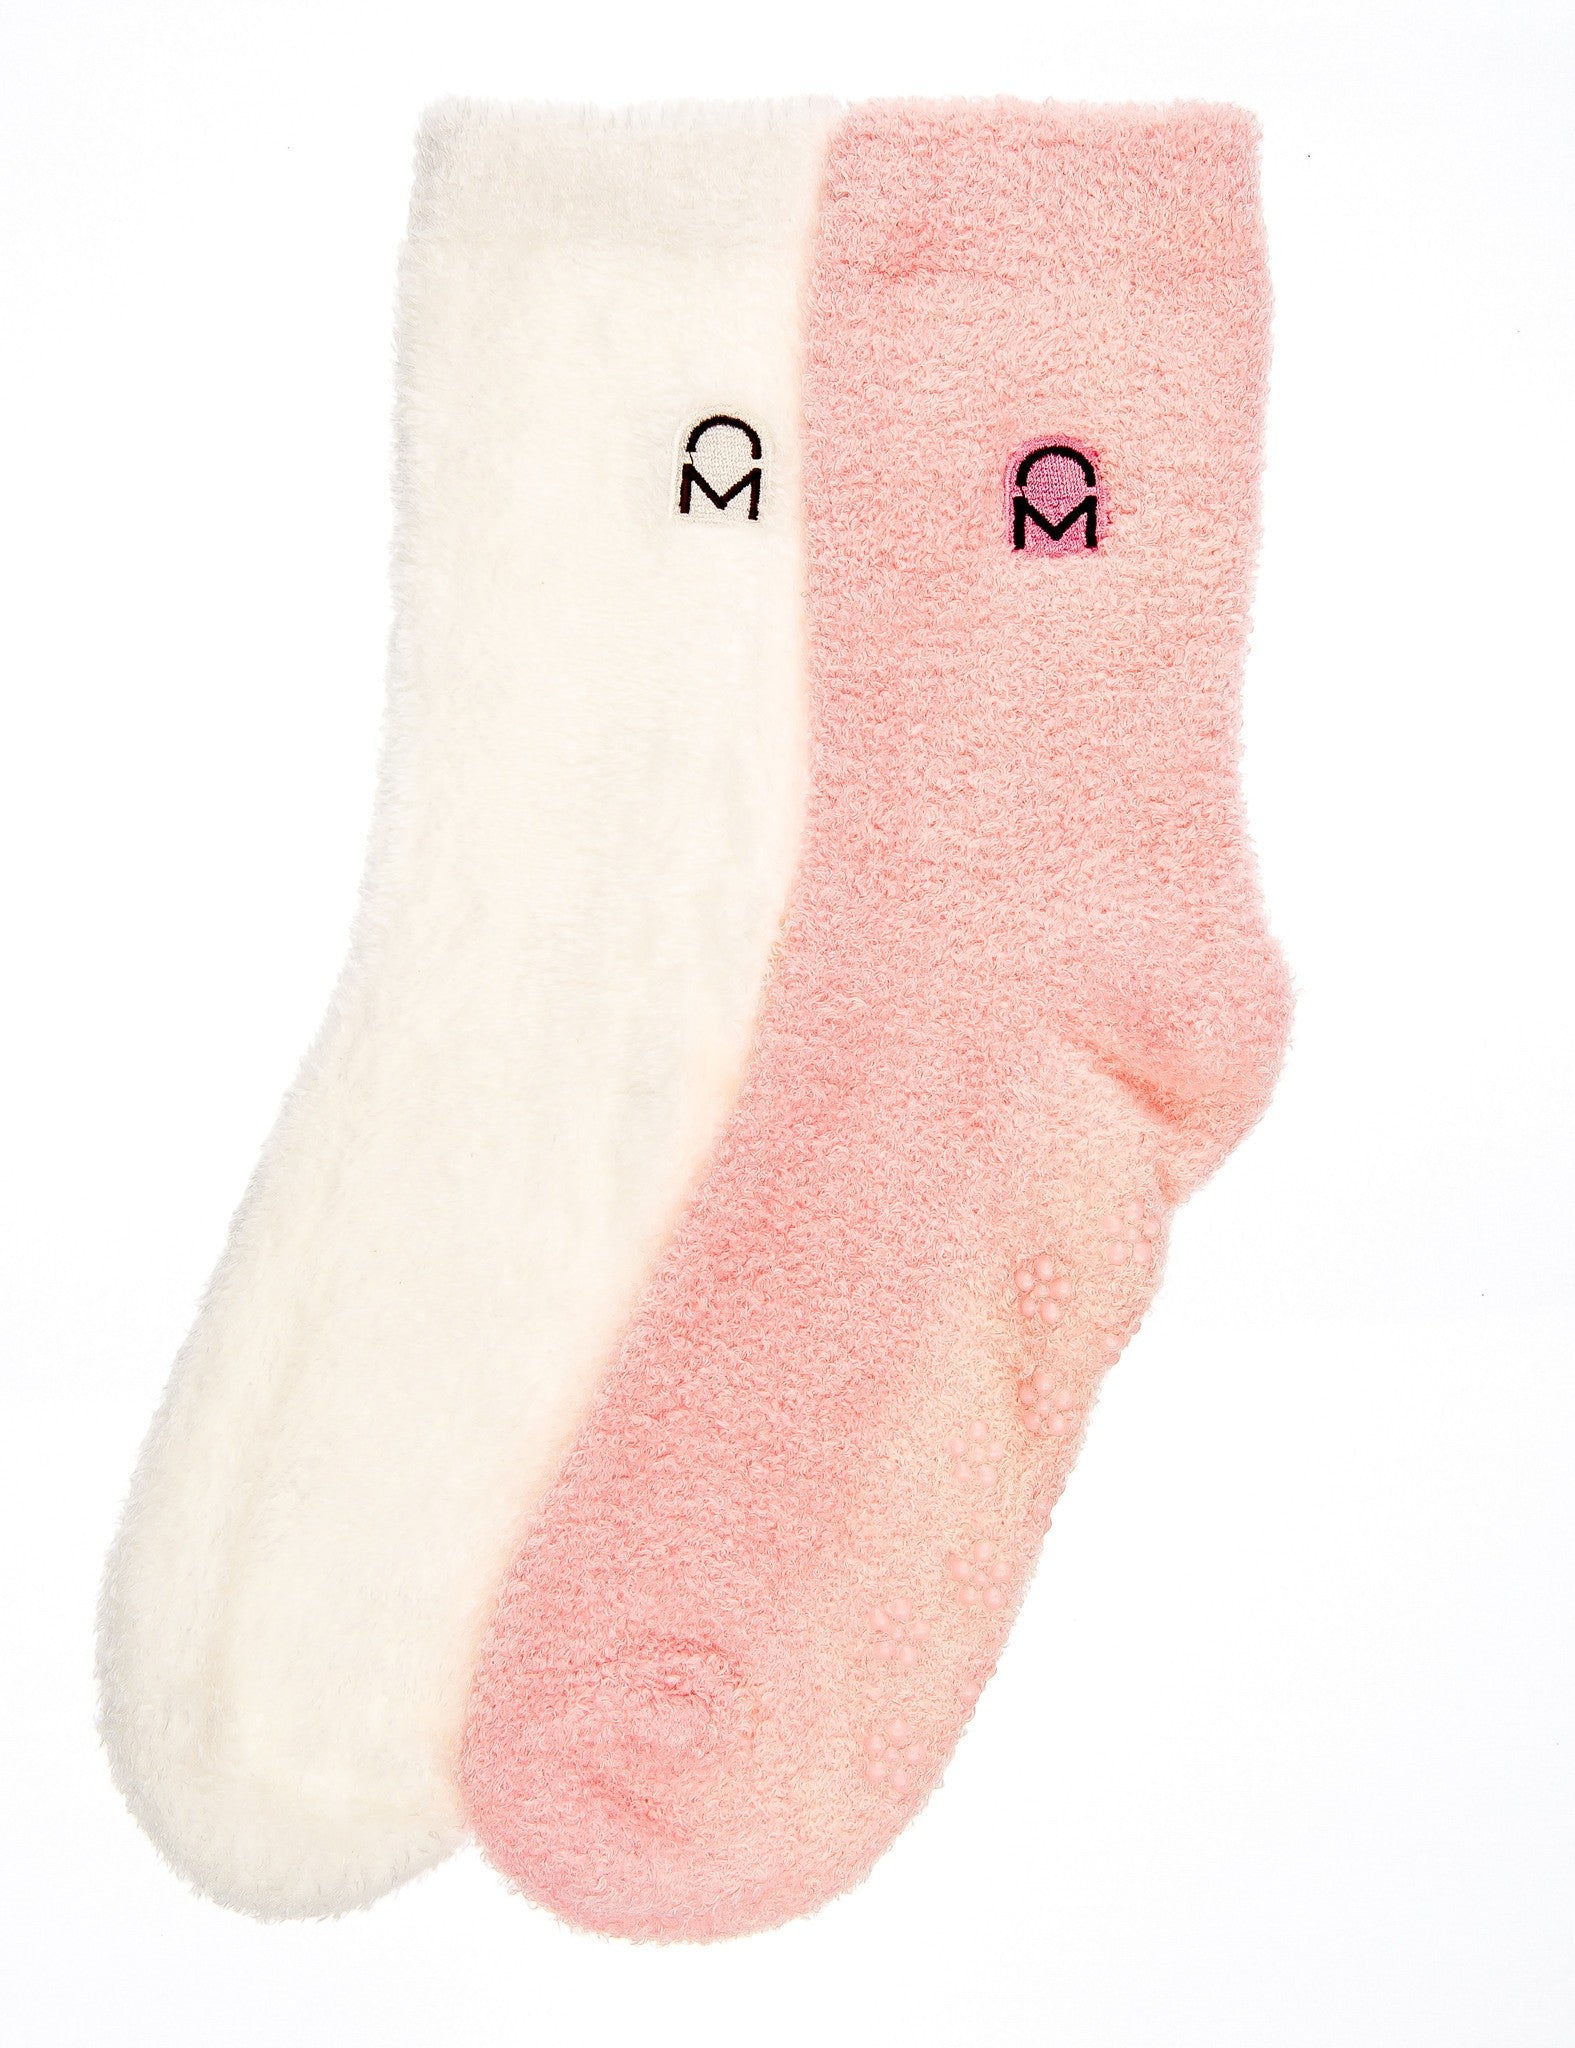 Women's Soft Anti-Skid Winter Feather Socks - 2-Pairs